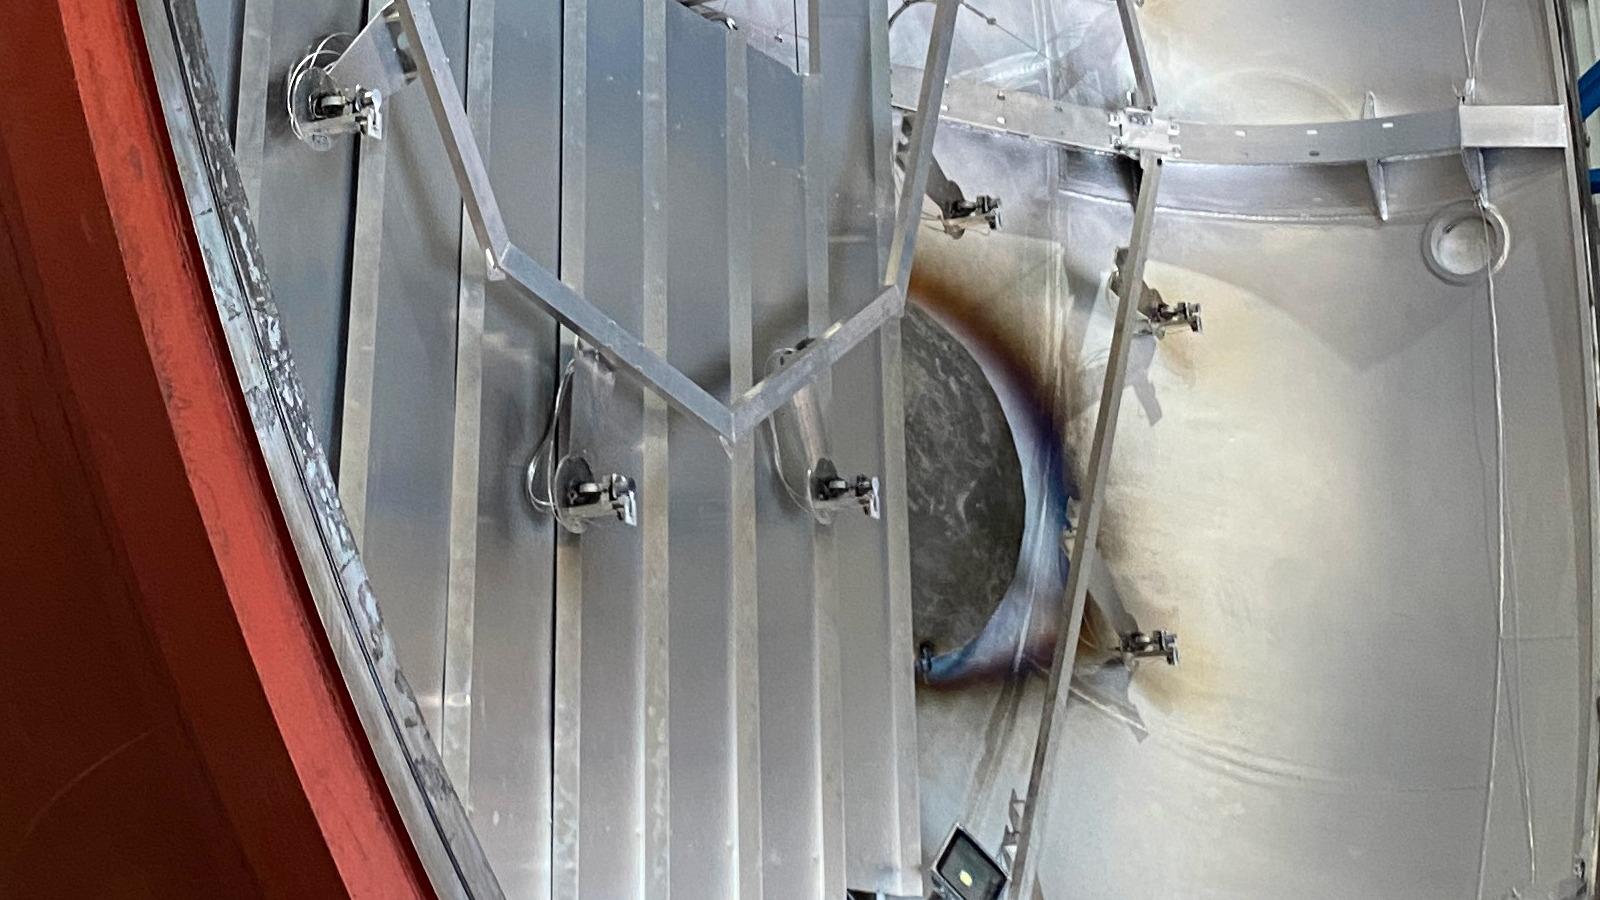 LBT aluminizing system bell jar view of the aluminum crucibles